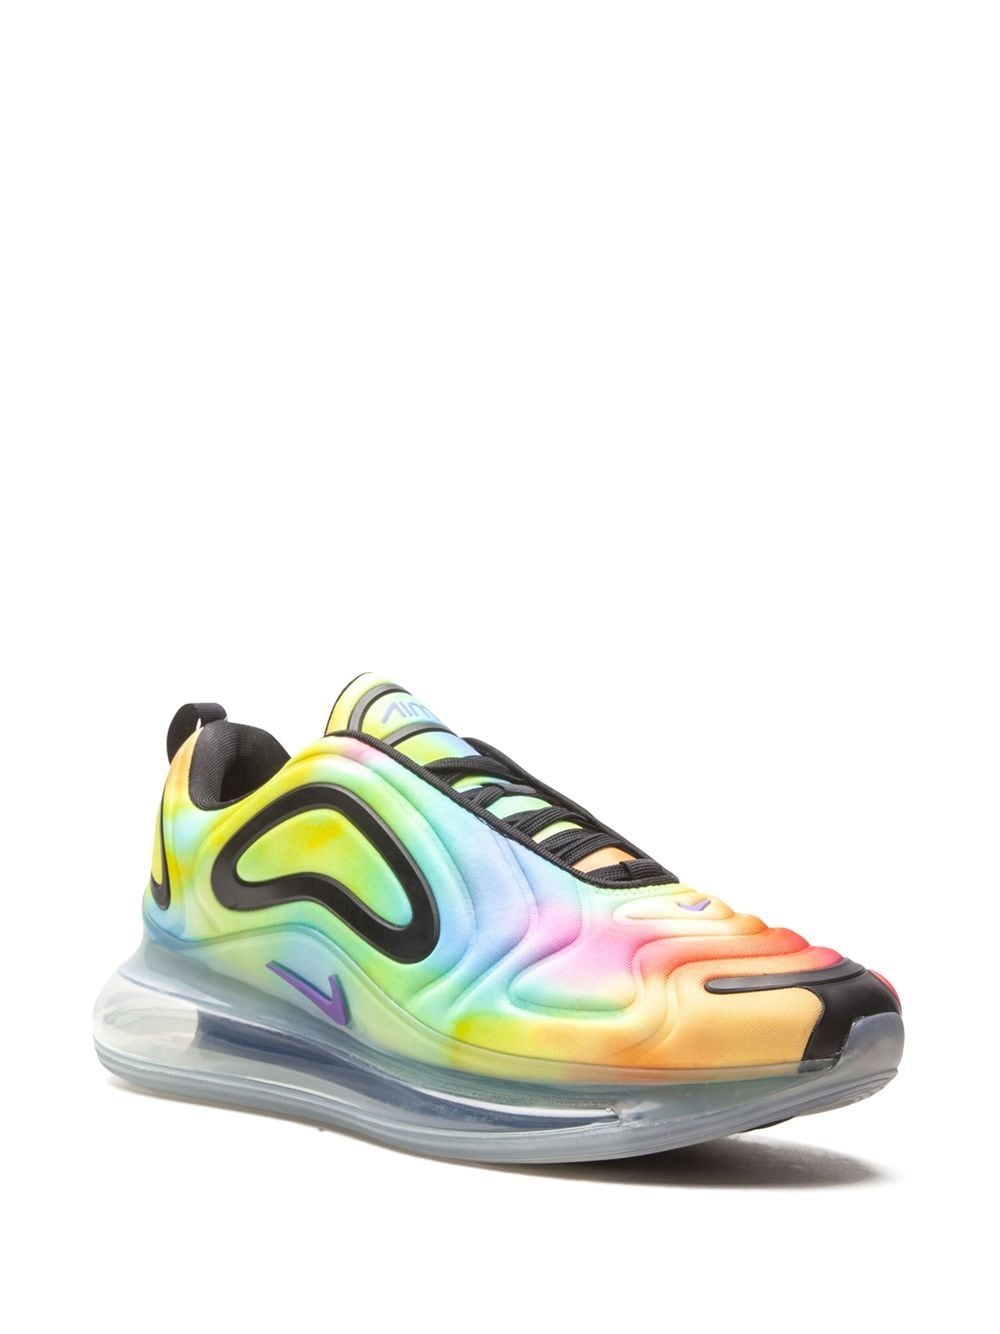 Nike Air Max 720 Sneakers In Multicolour